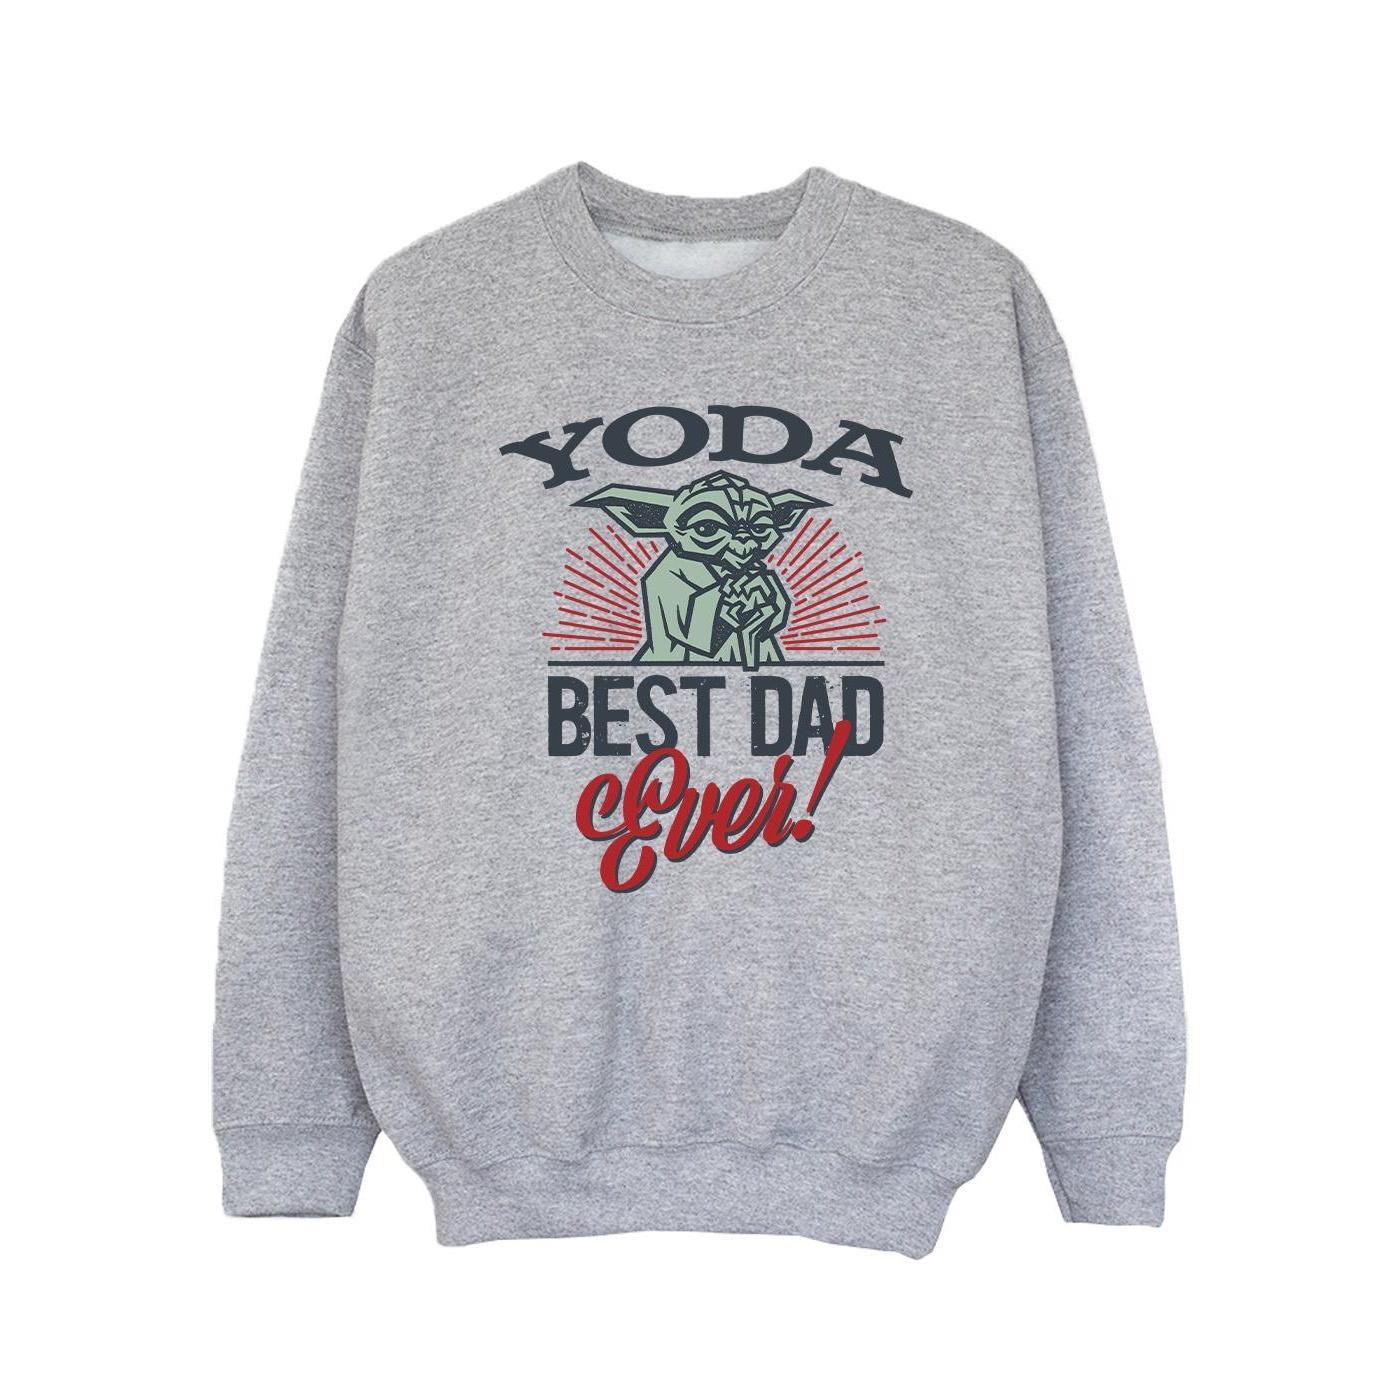 Star Wars Girls Mandalorian Yoda Dad Sweatshirt (Sports Grey) (9-11 Years)